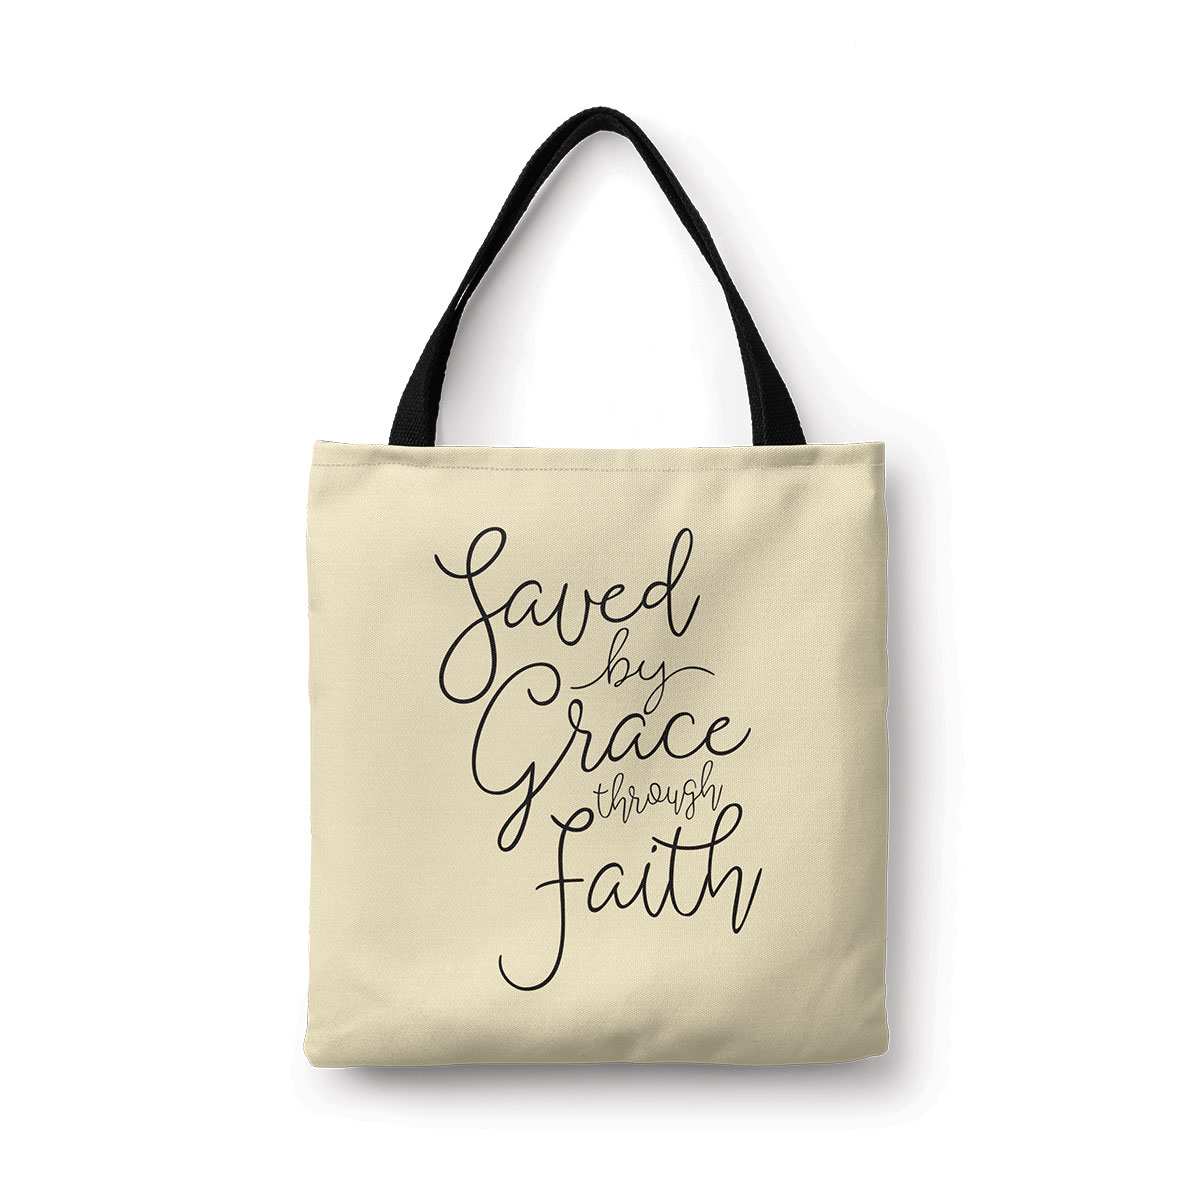 Saved By Grace Through Faith Canvas Tote